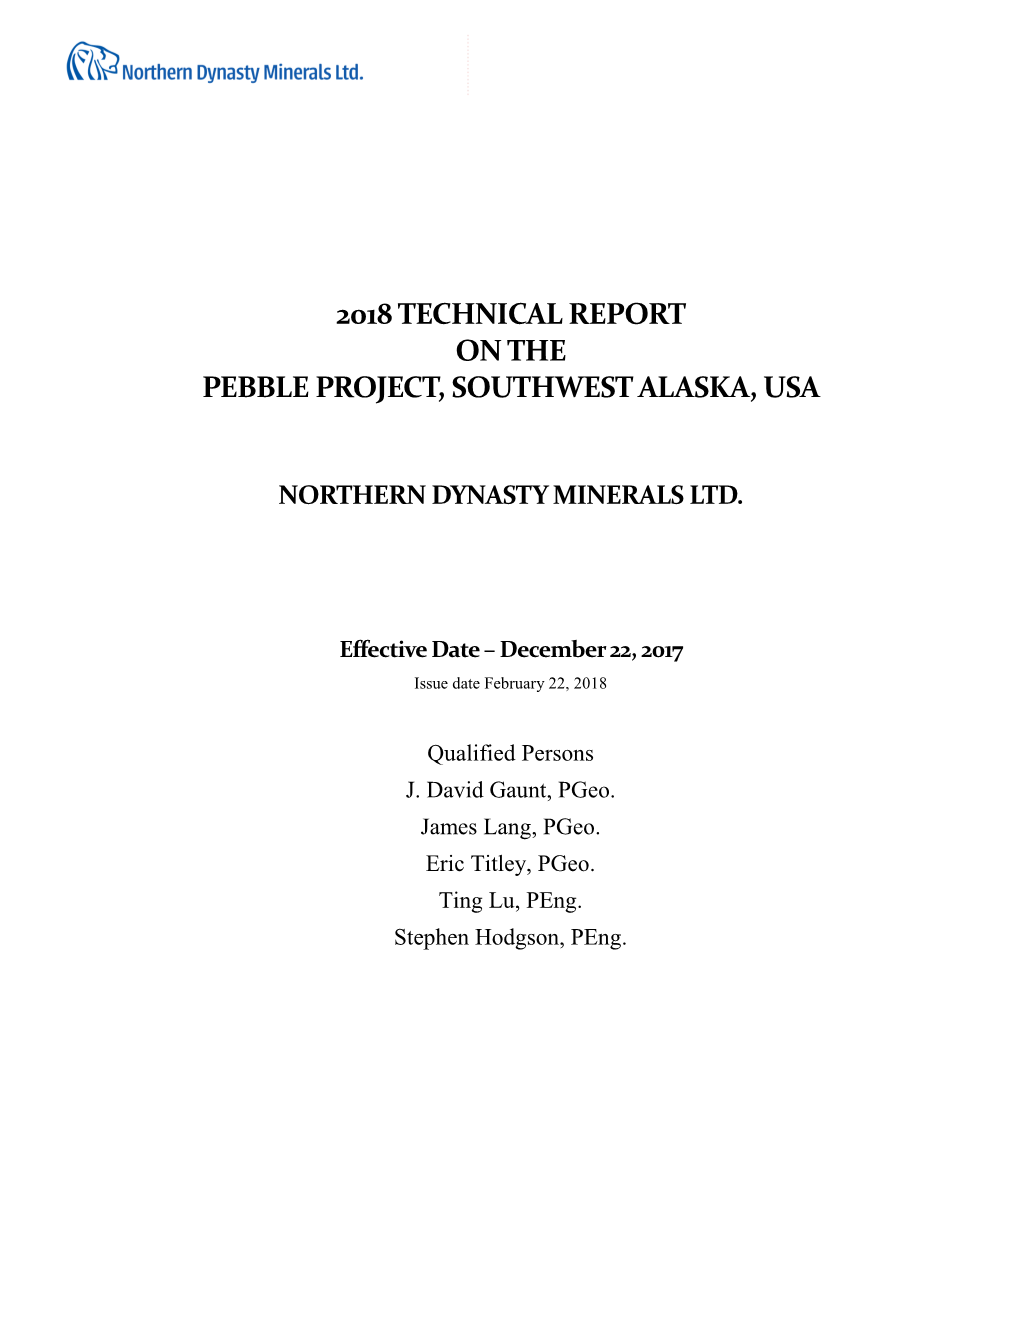 2018 Technical Report on the Pebble Project, Southwest Alaska, Usa